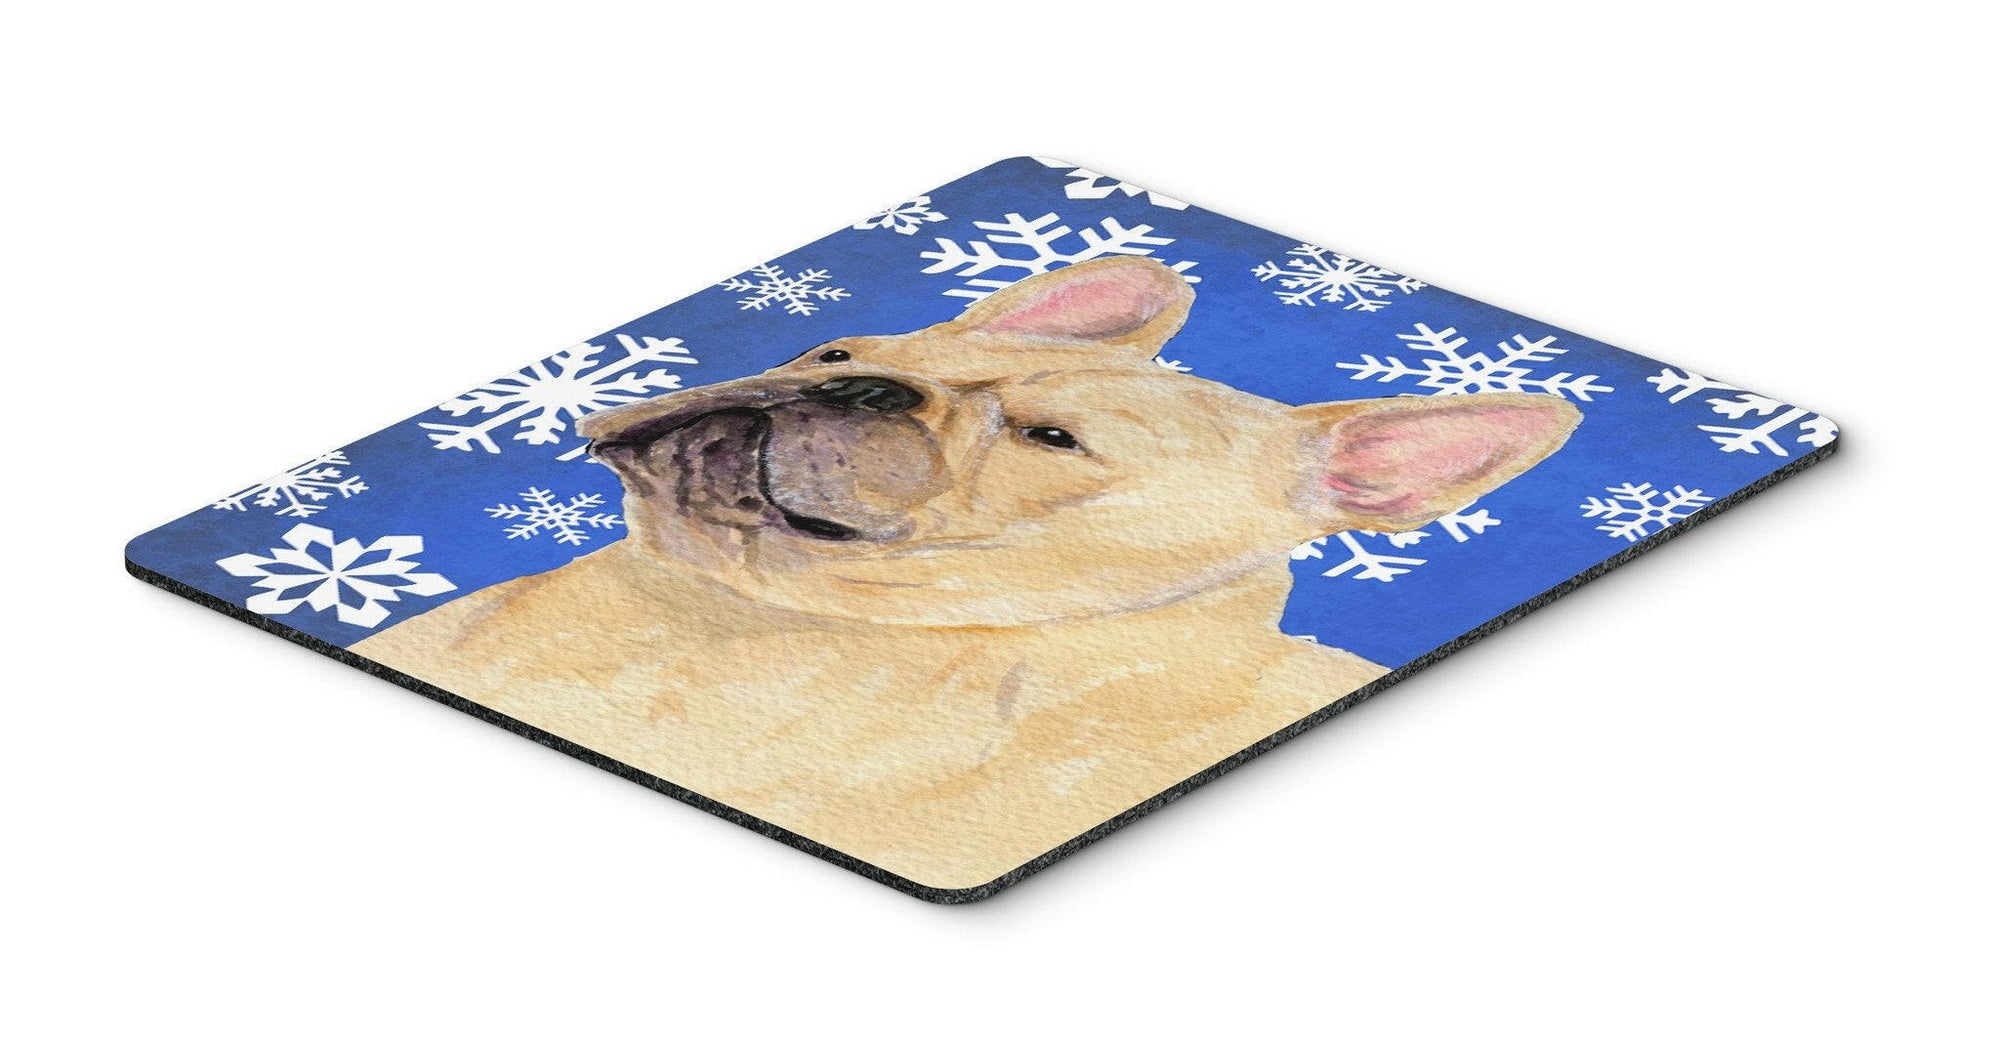 French Bulldog Winter Snowflakes Holiday Mouse Pad, Hot Pad or Trivet by Caroline's Treasures